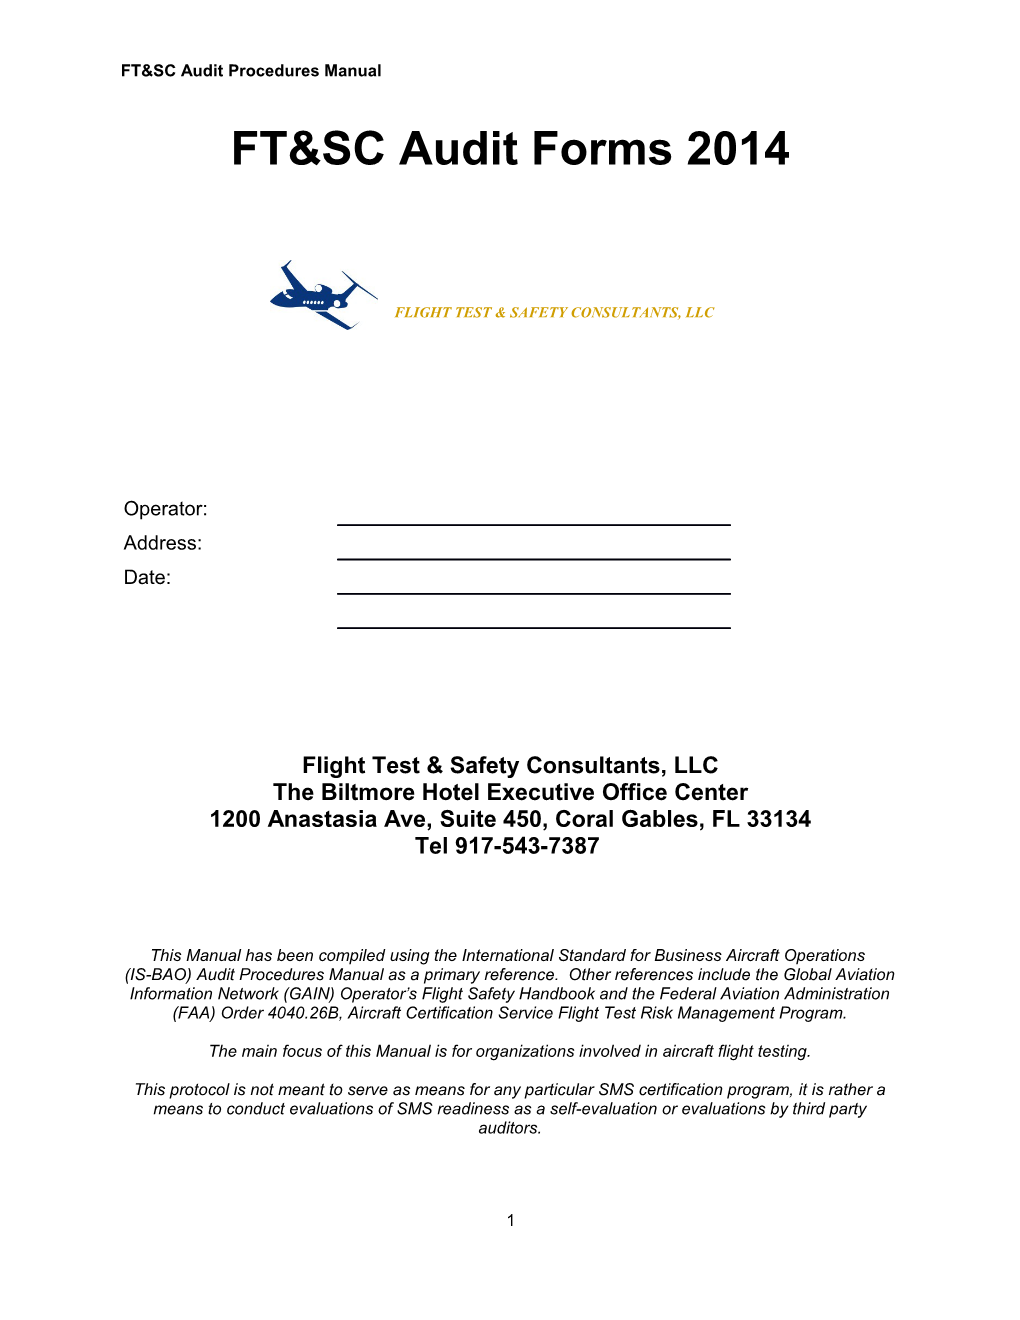 Flight Test & Safety Consultants, LLC